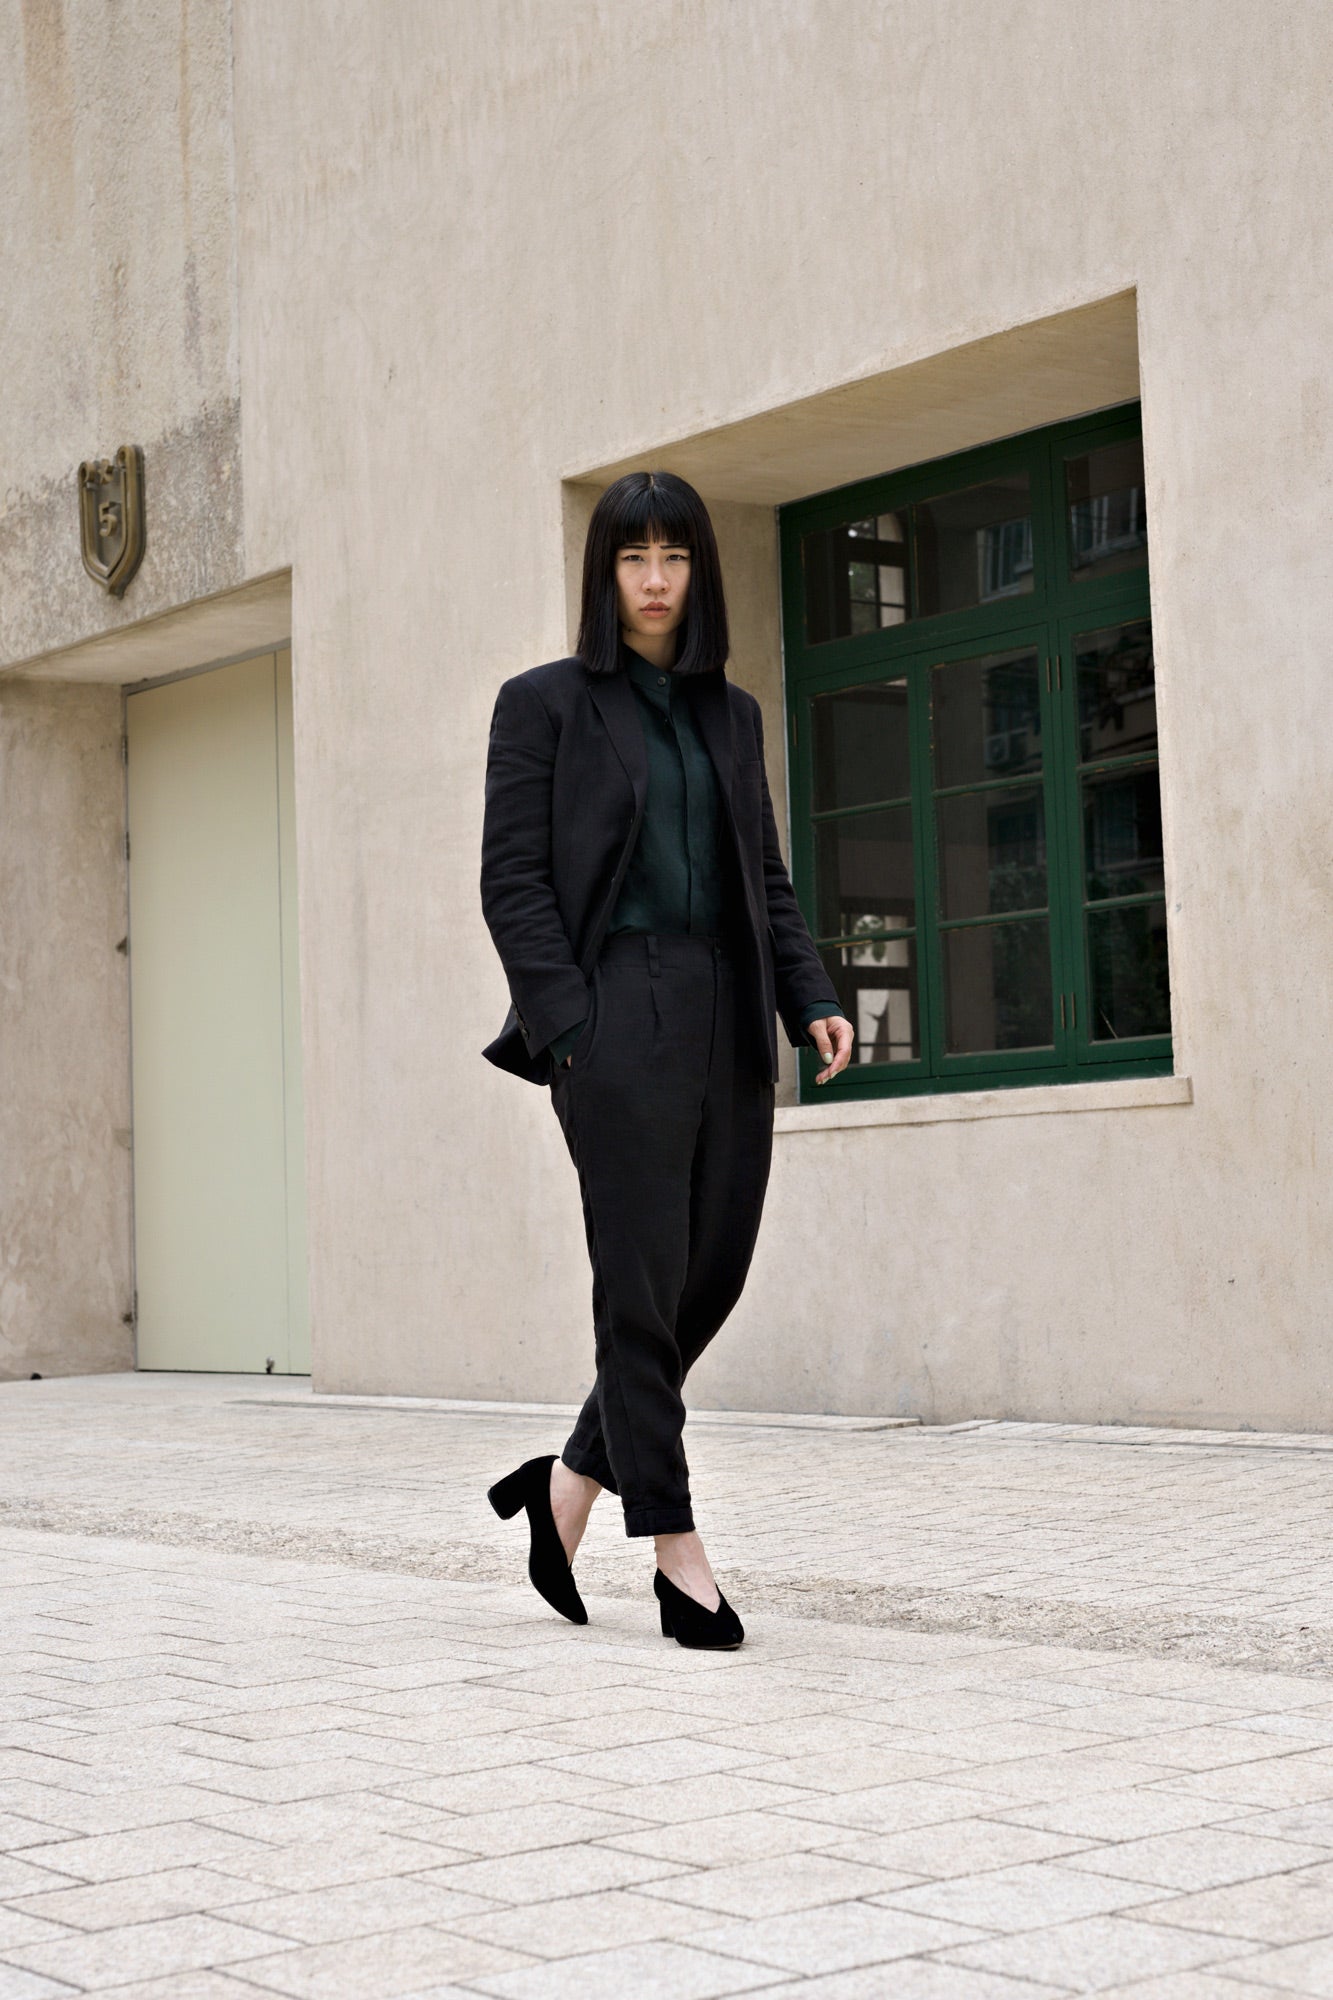 ROSEN-S Daily Suit Trousers - Black Linen